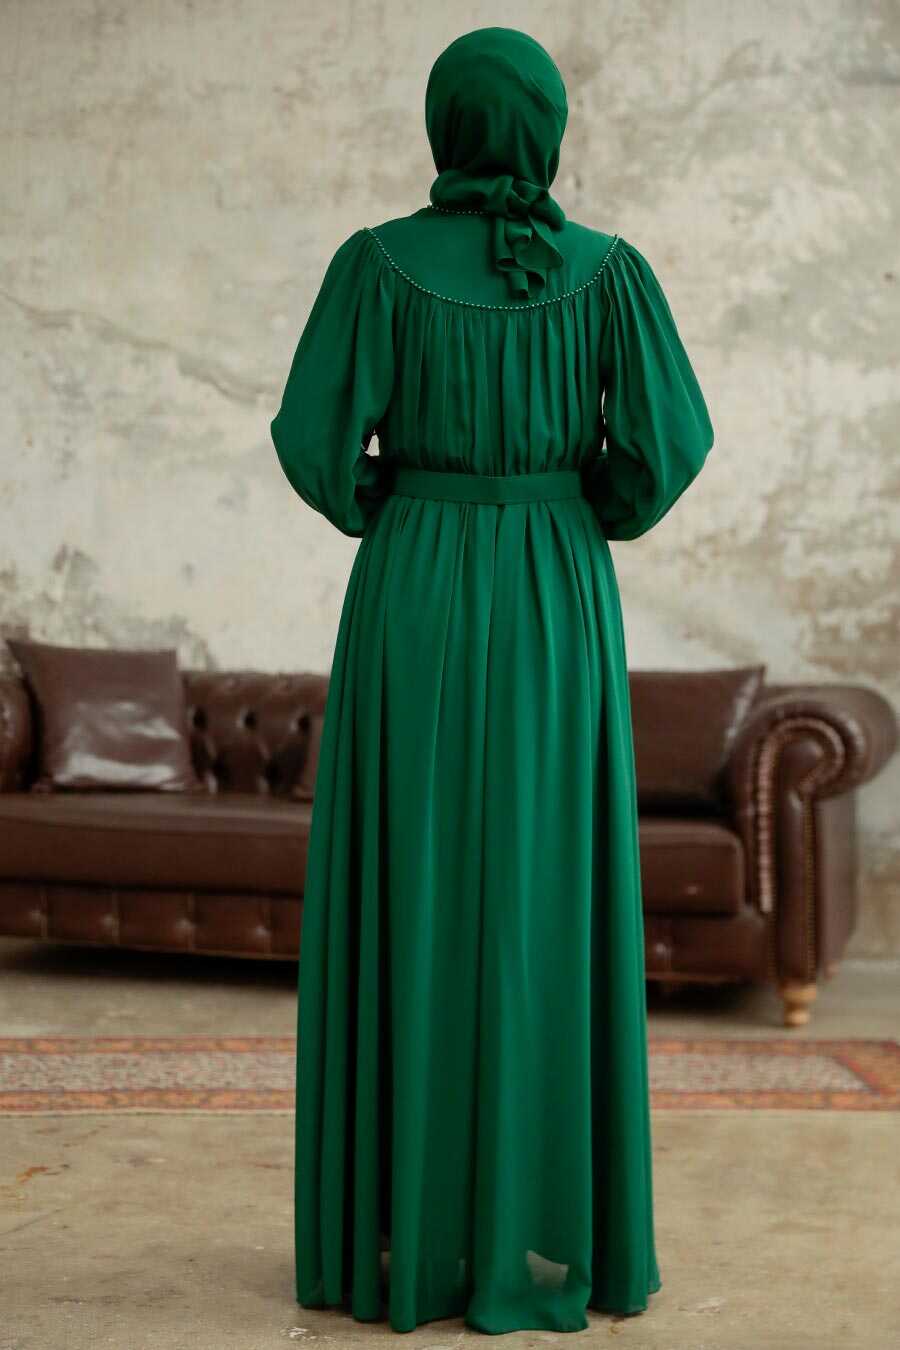 Neva Style - Emerald Green Hijab For Women Dress 33284ZY